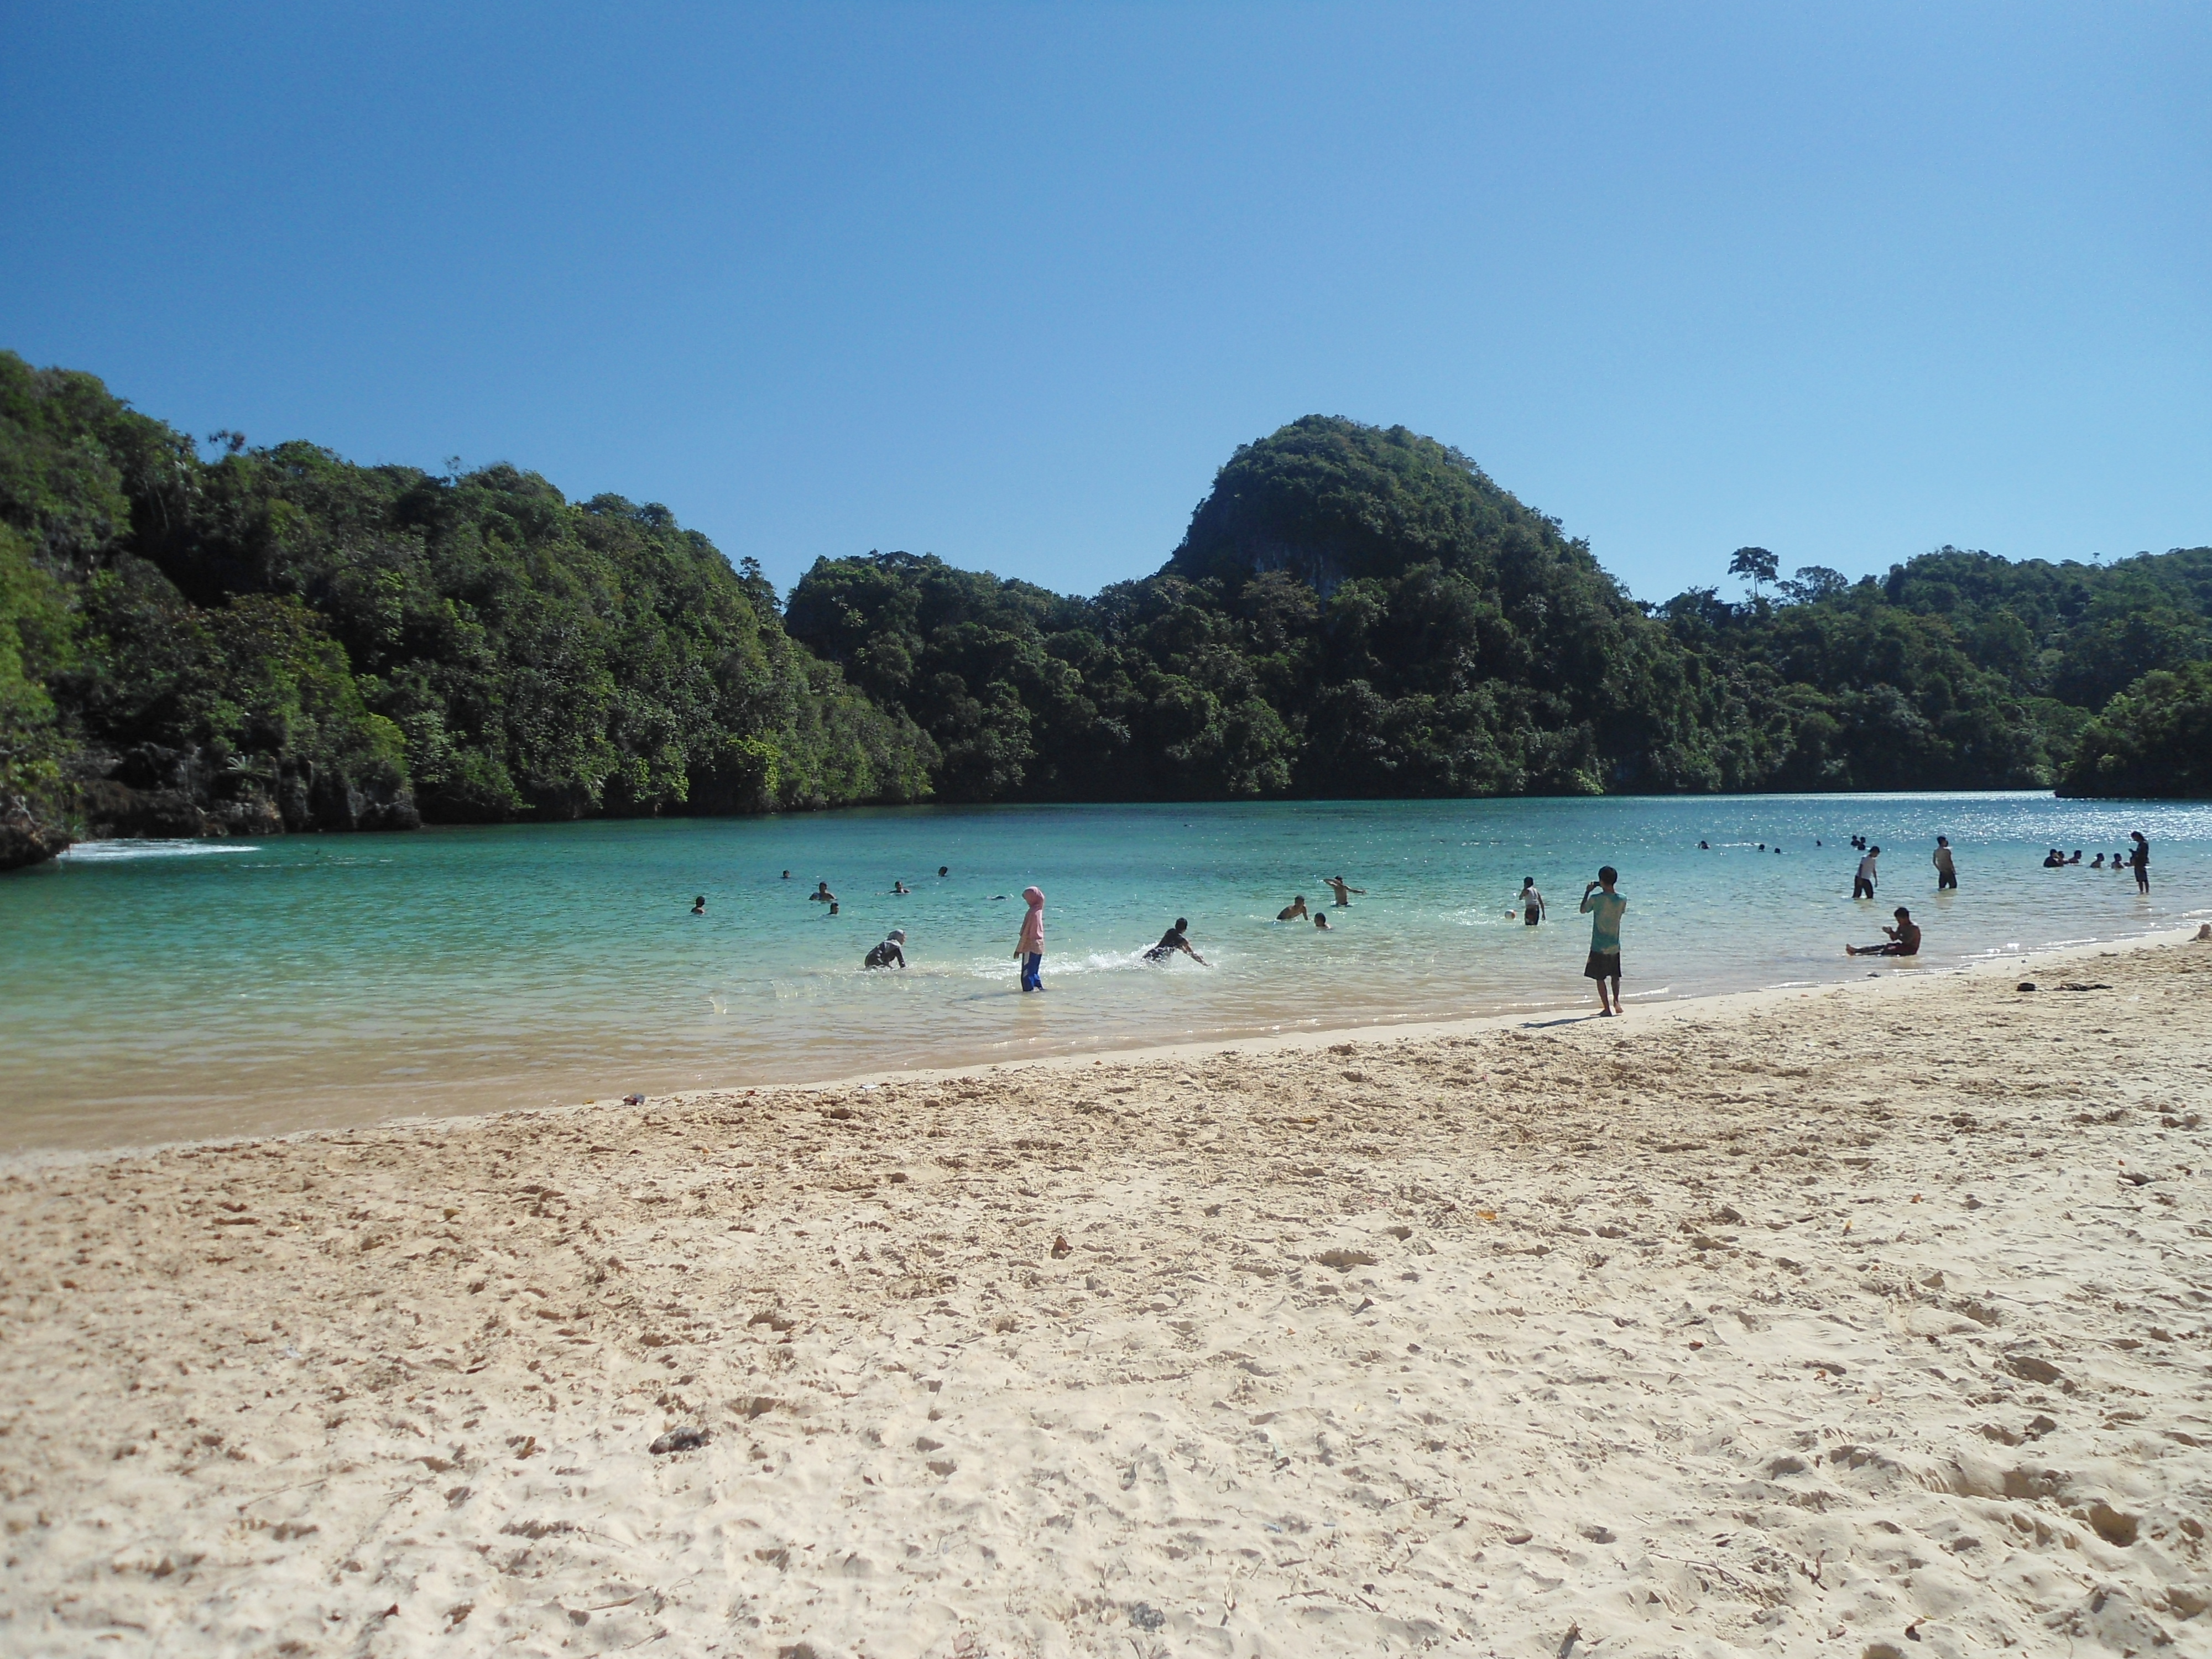 Download this Pulau Sempu picture